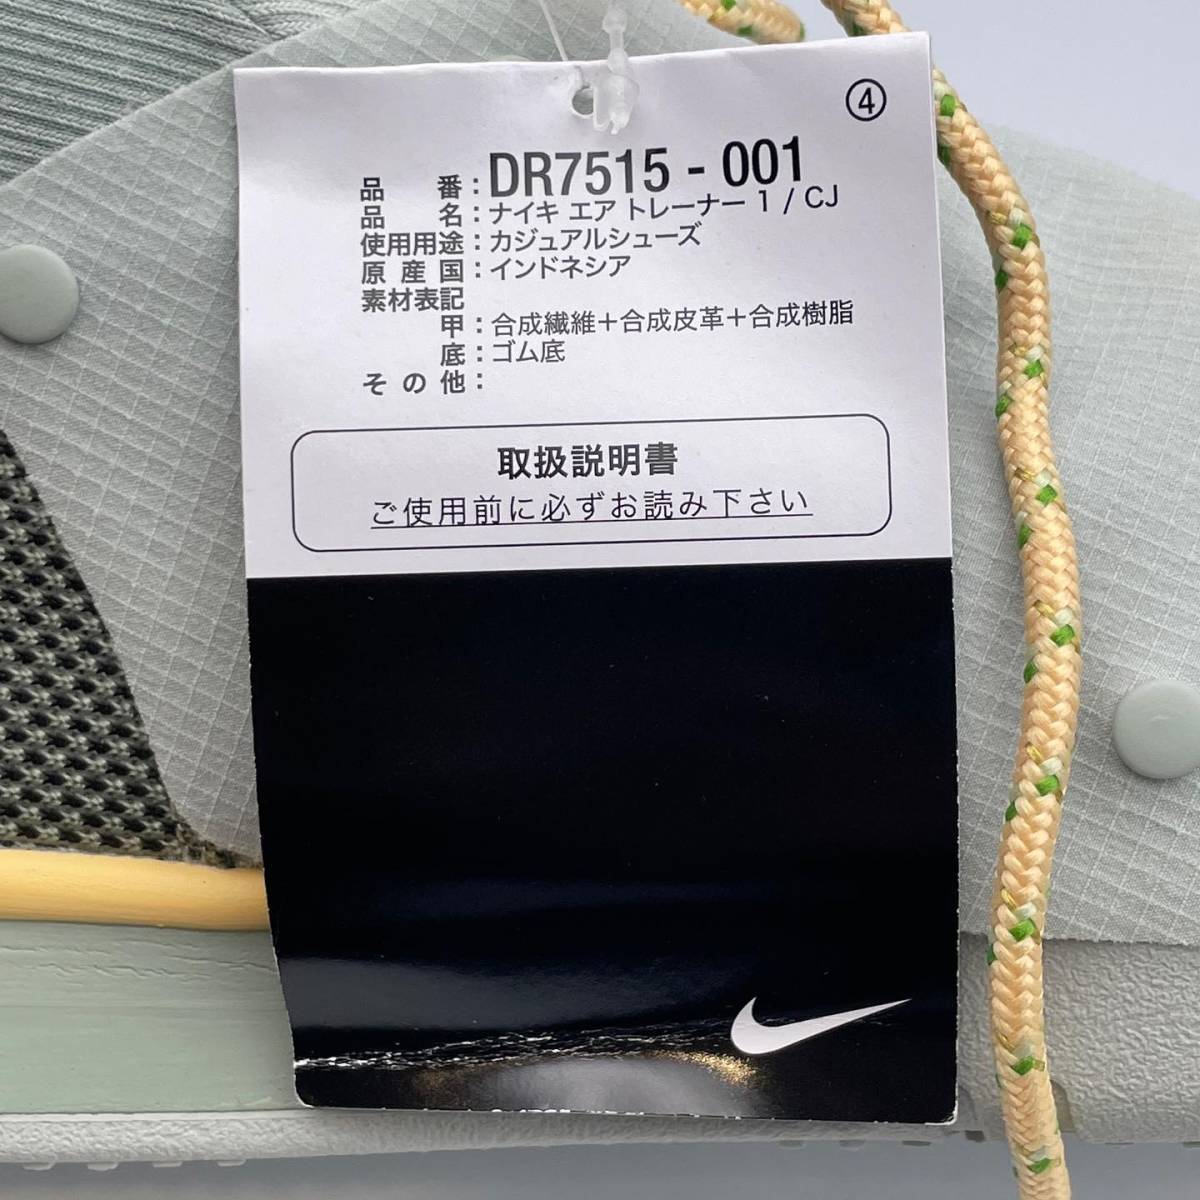 22 year made NIKE TRAVIS SCOTT AIR TRAINER 1 DR7515-001 Nike air sweatshirt one travis Scott gray 23.5 box * black tag attaching store receipt possible 